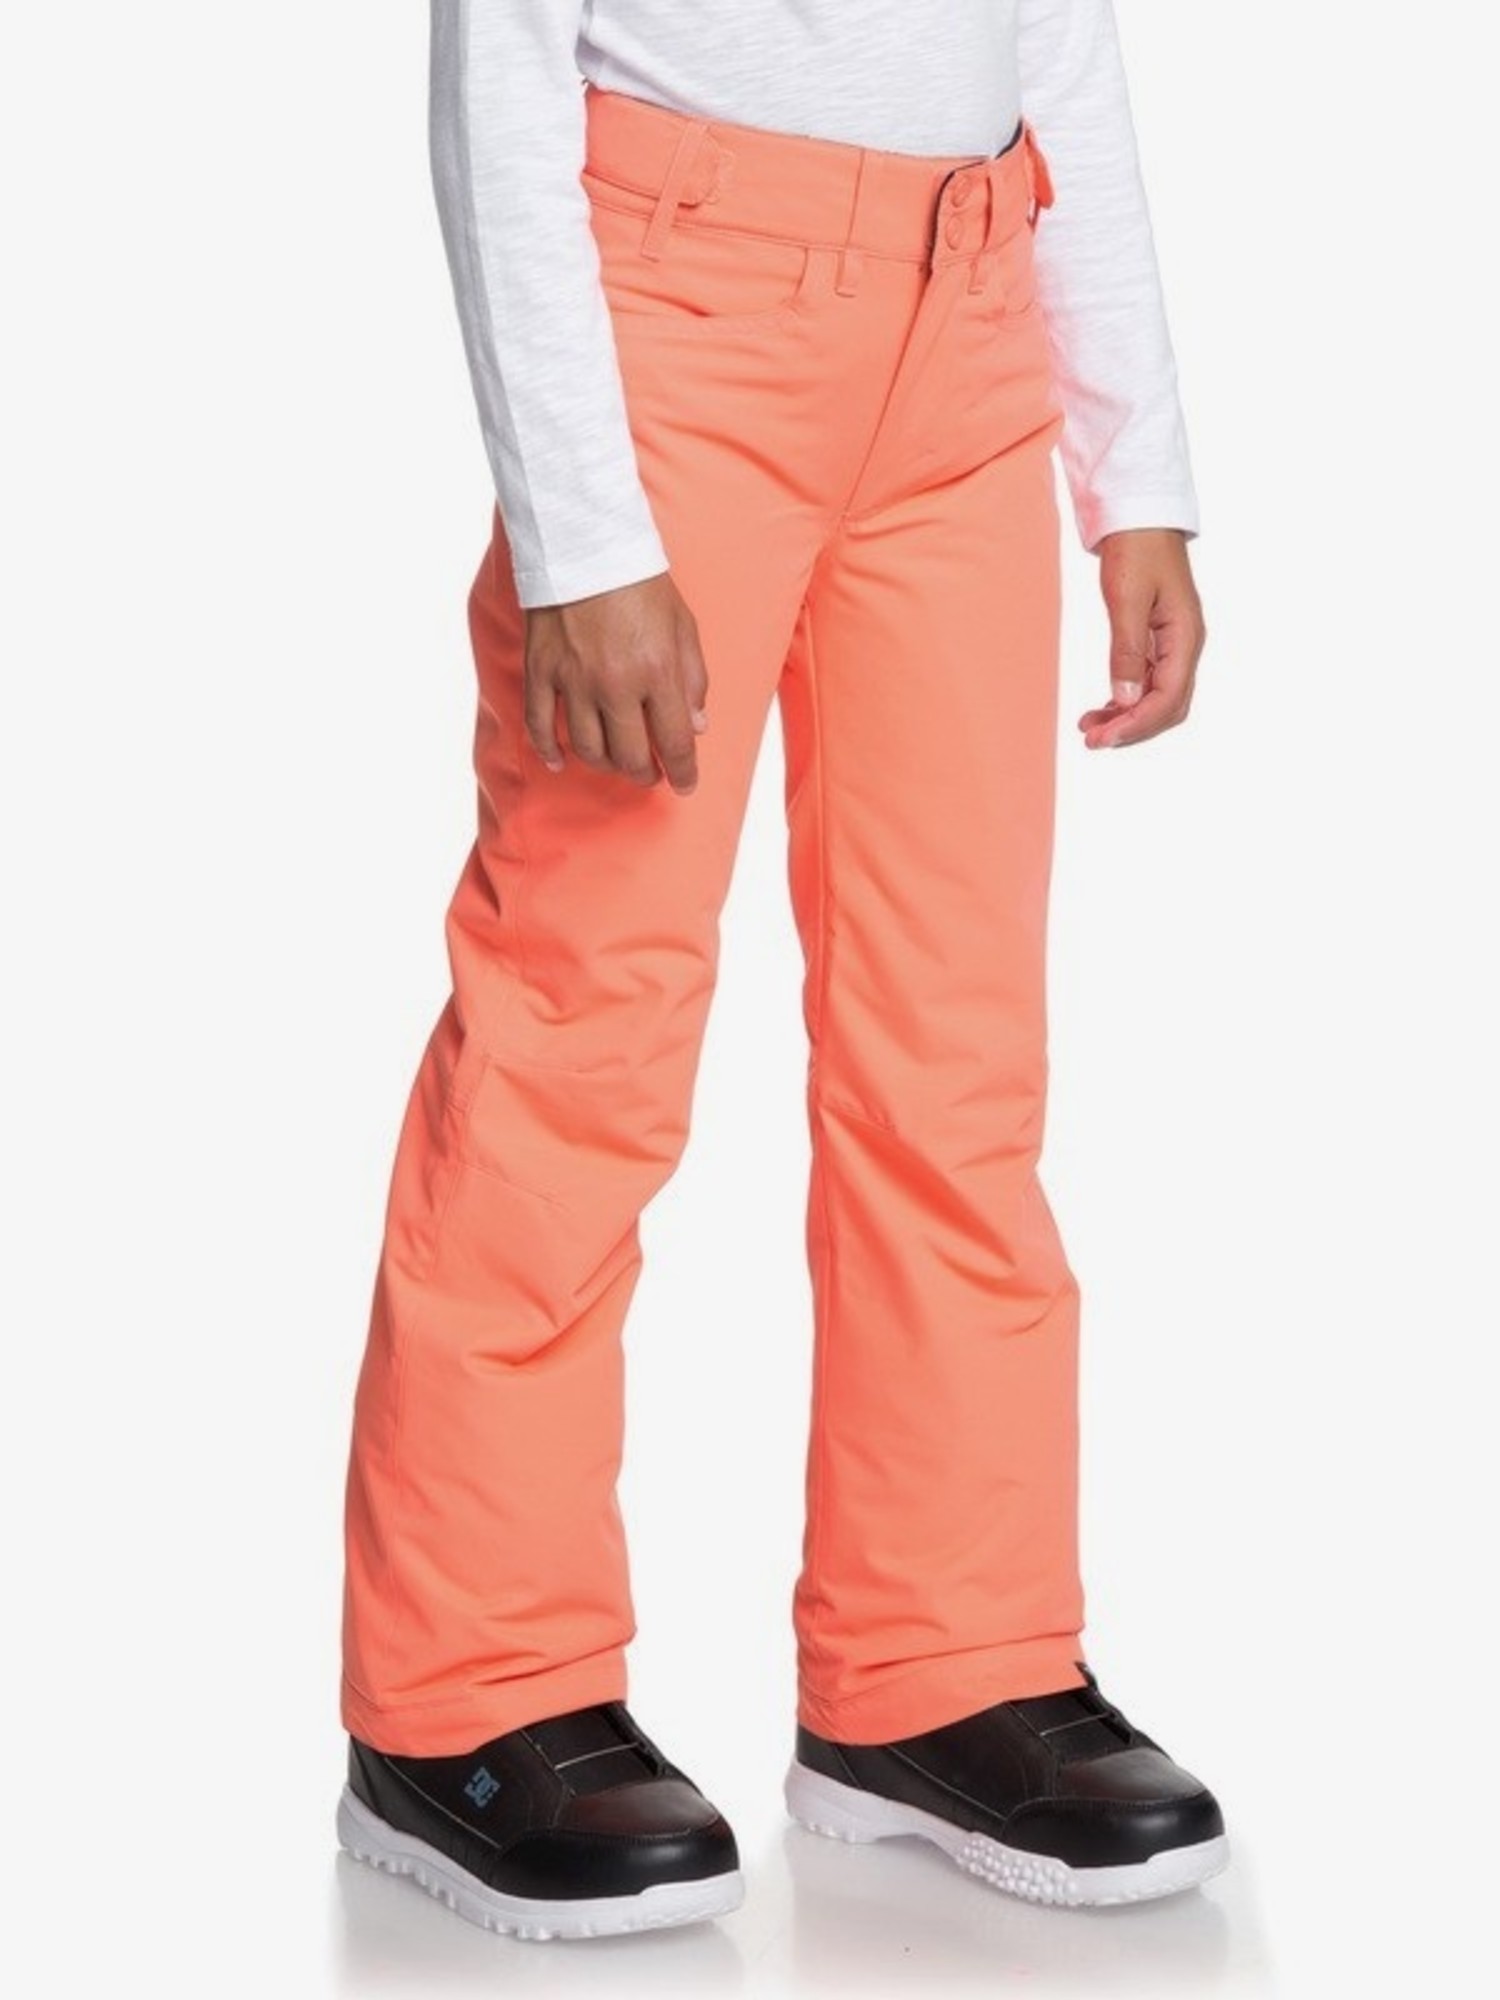 Roxy Girls snow pants/ski pants - sporting goods - by owner - sale -  craigslist